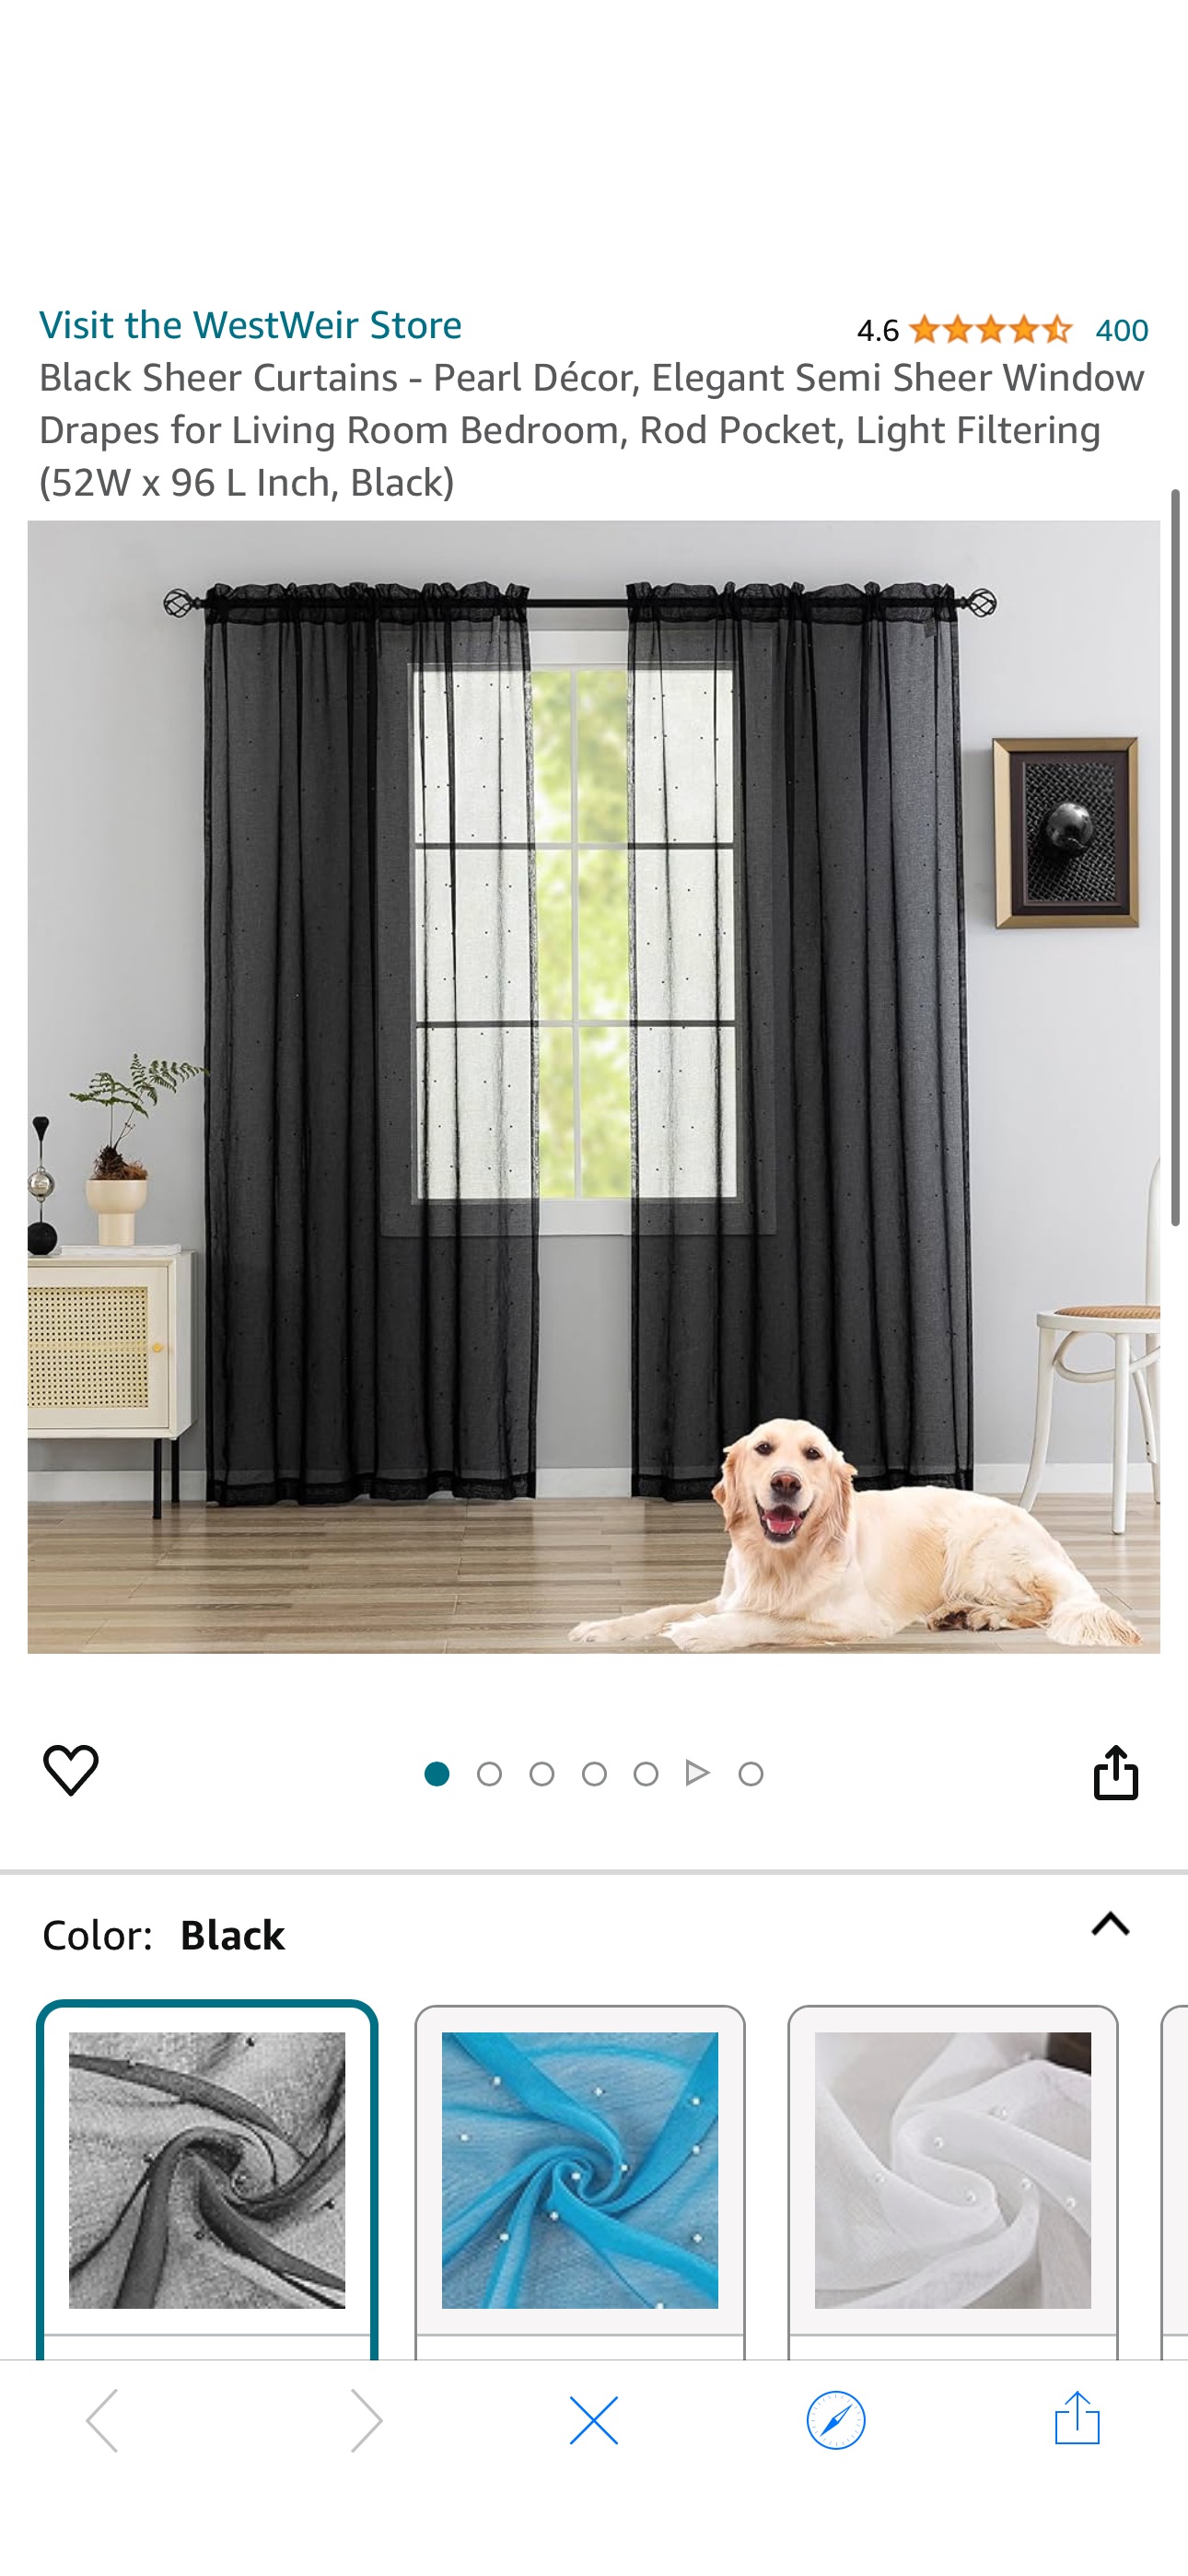 Amazon.com: WestWeir Black Sheer Curtains - Pearl Décor, Elegant Semi Sheer Window Drapes for Living Room Bedroom, Rod Pocket, Light Filtering (52W x 96 L Inch, Black) : Home & Kitchen